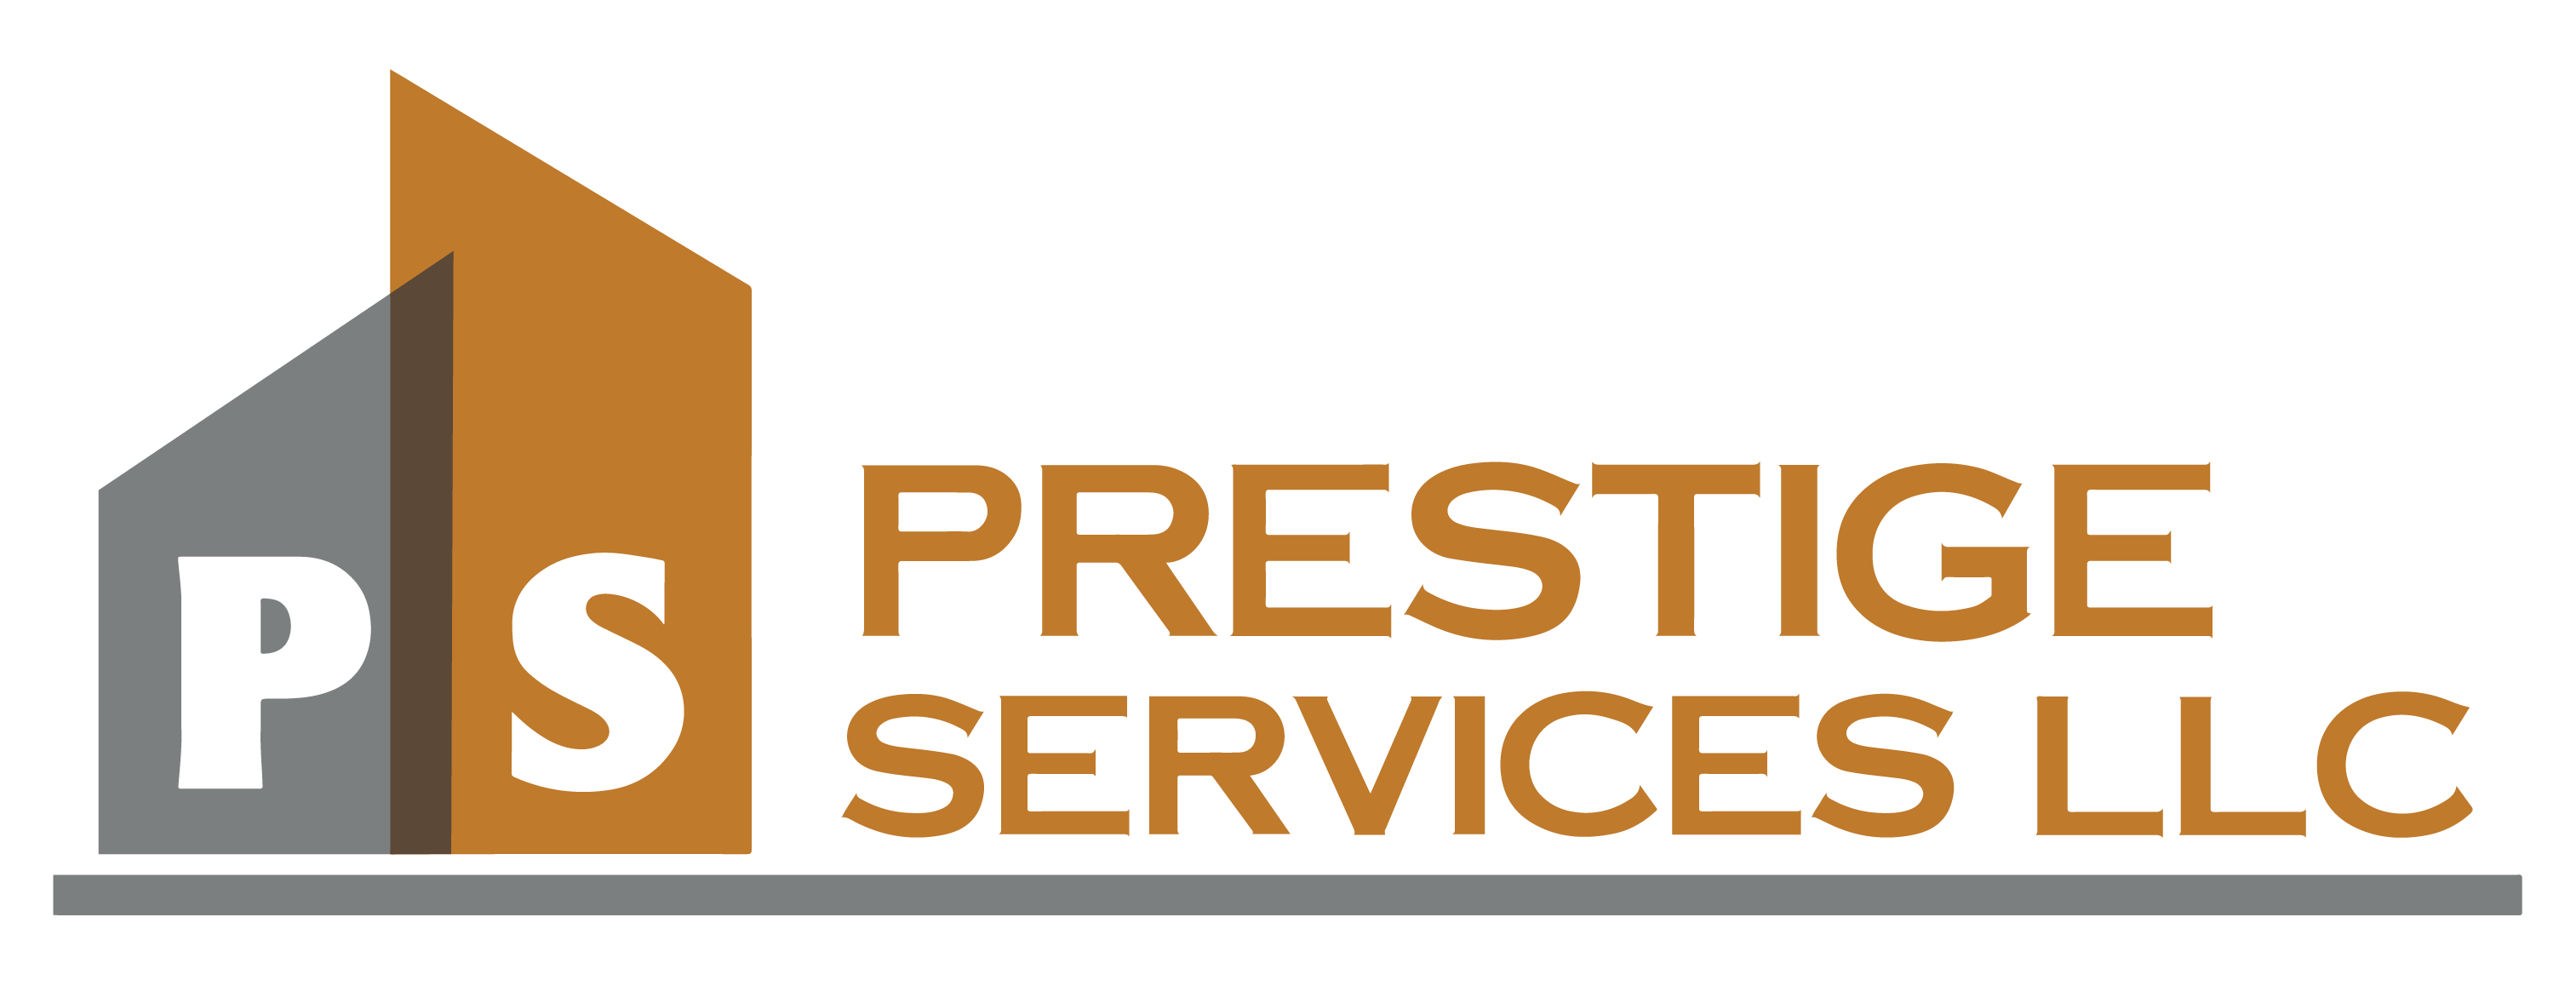 Prestige Services Logo